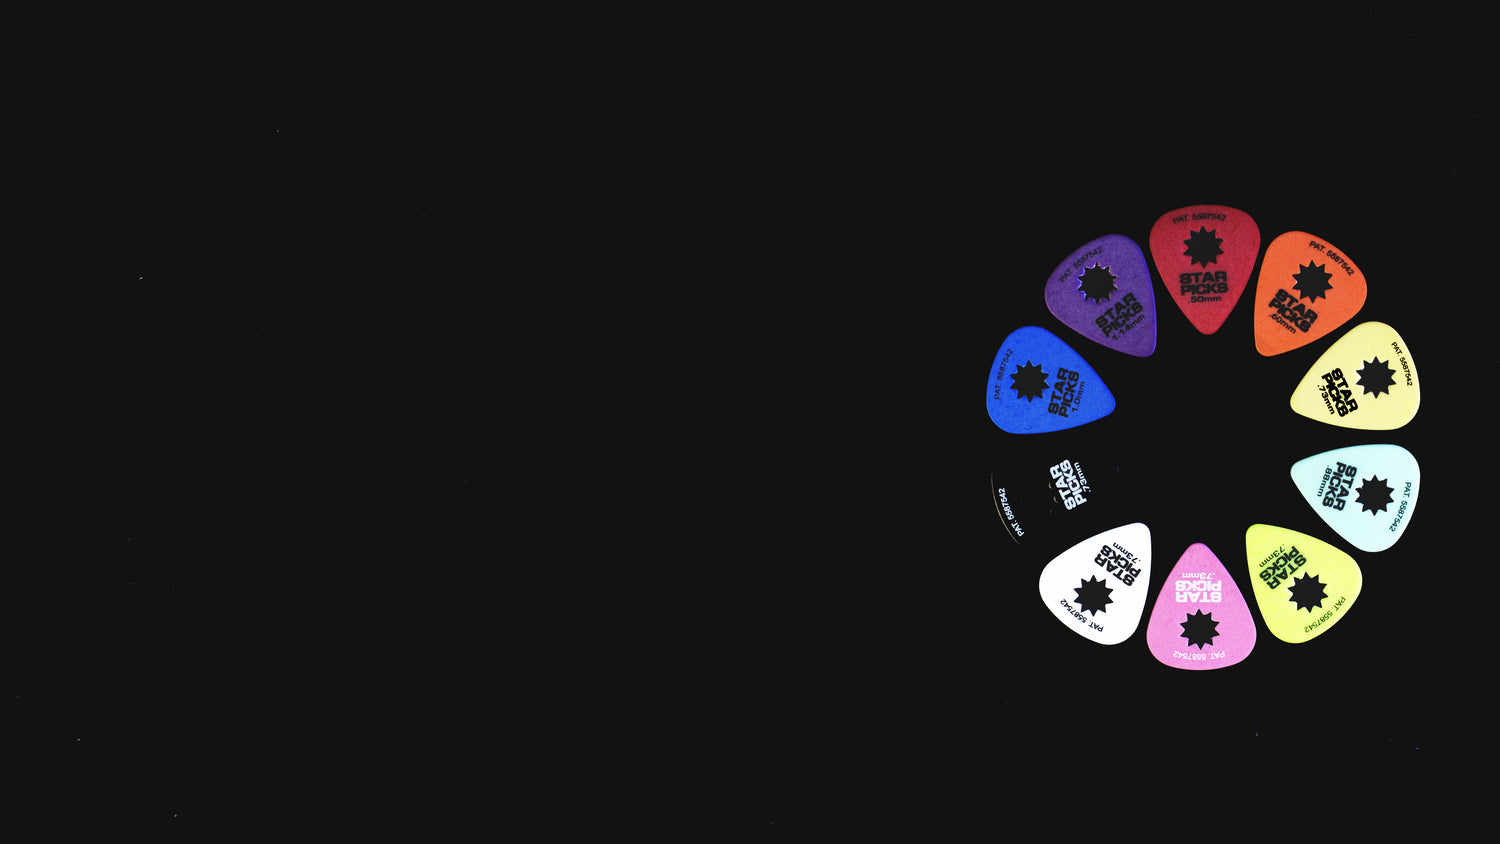 Cleartone guitar picks arranged in a multicolored circle